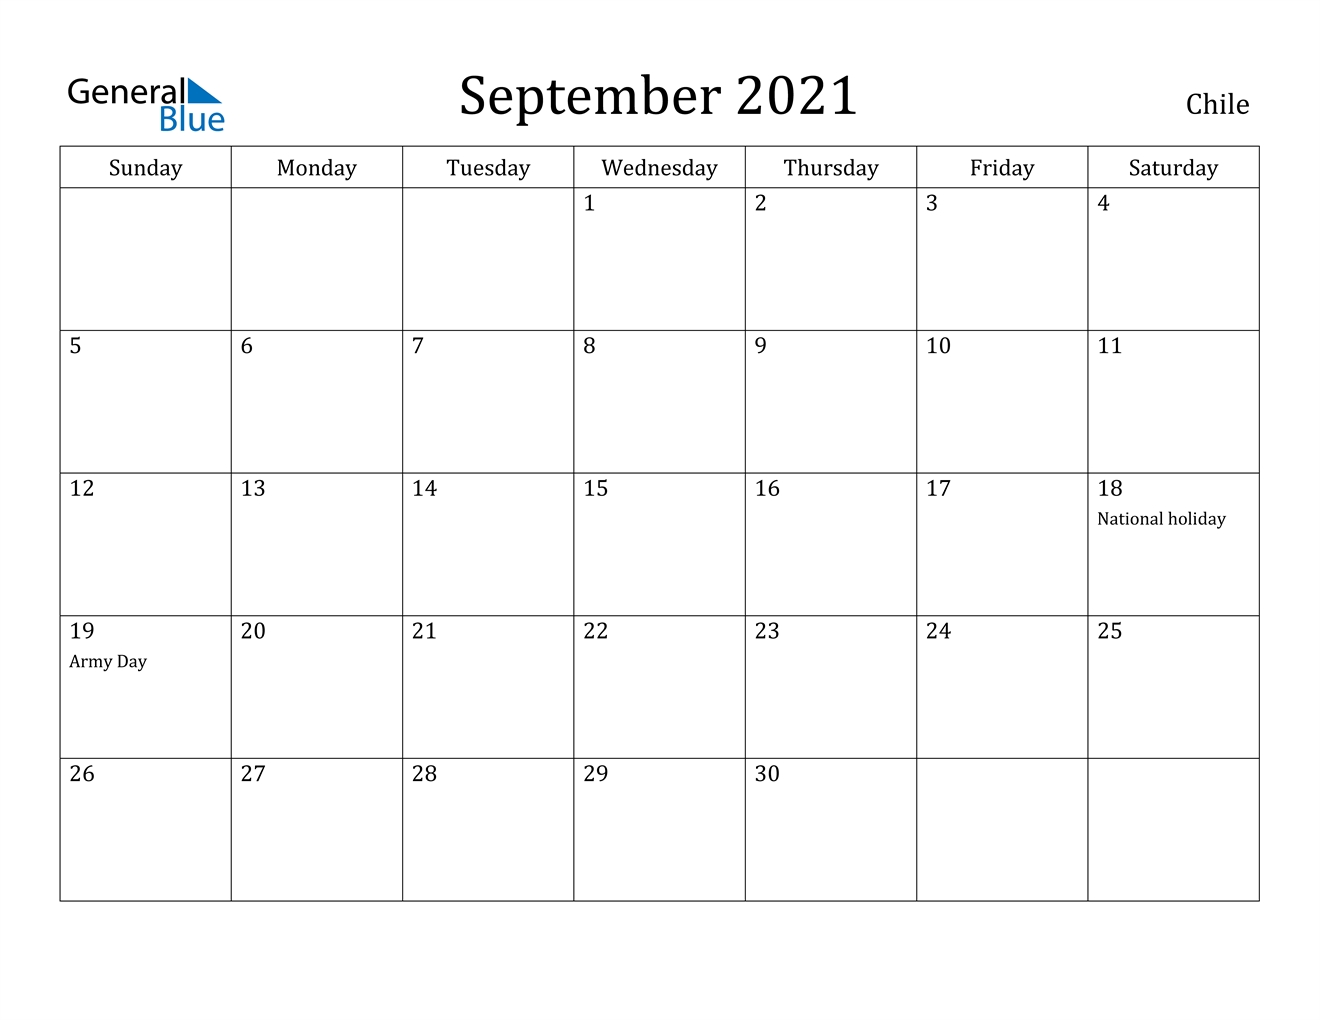 Take September Calendar 2021 With Holiday